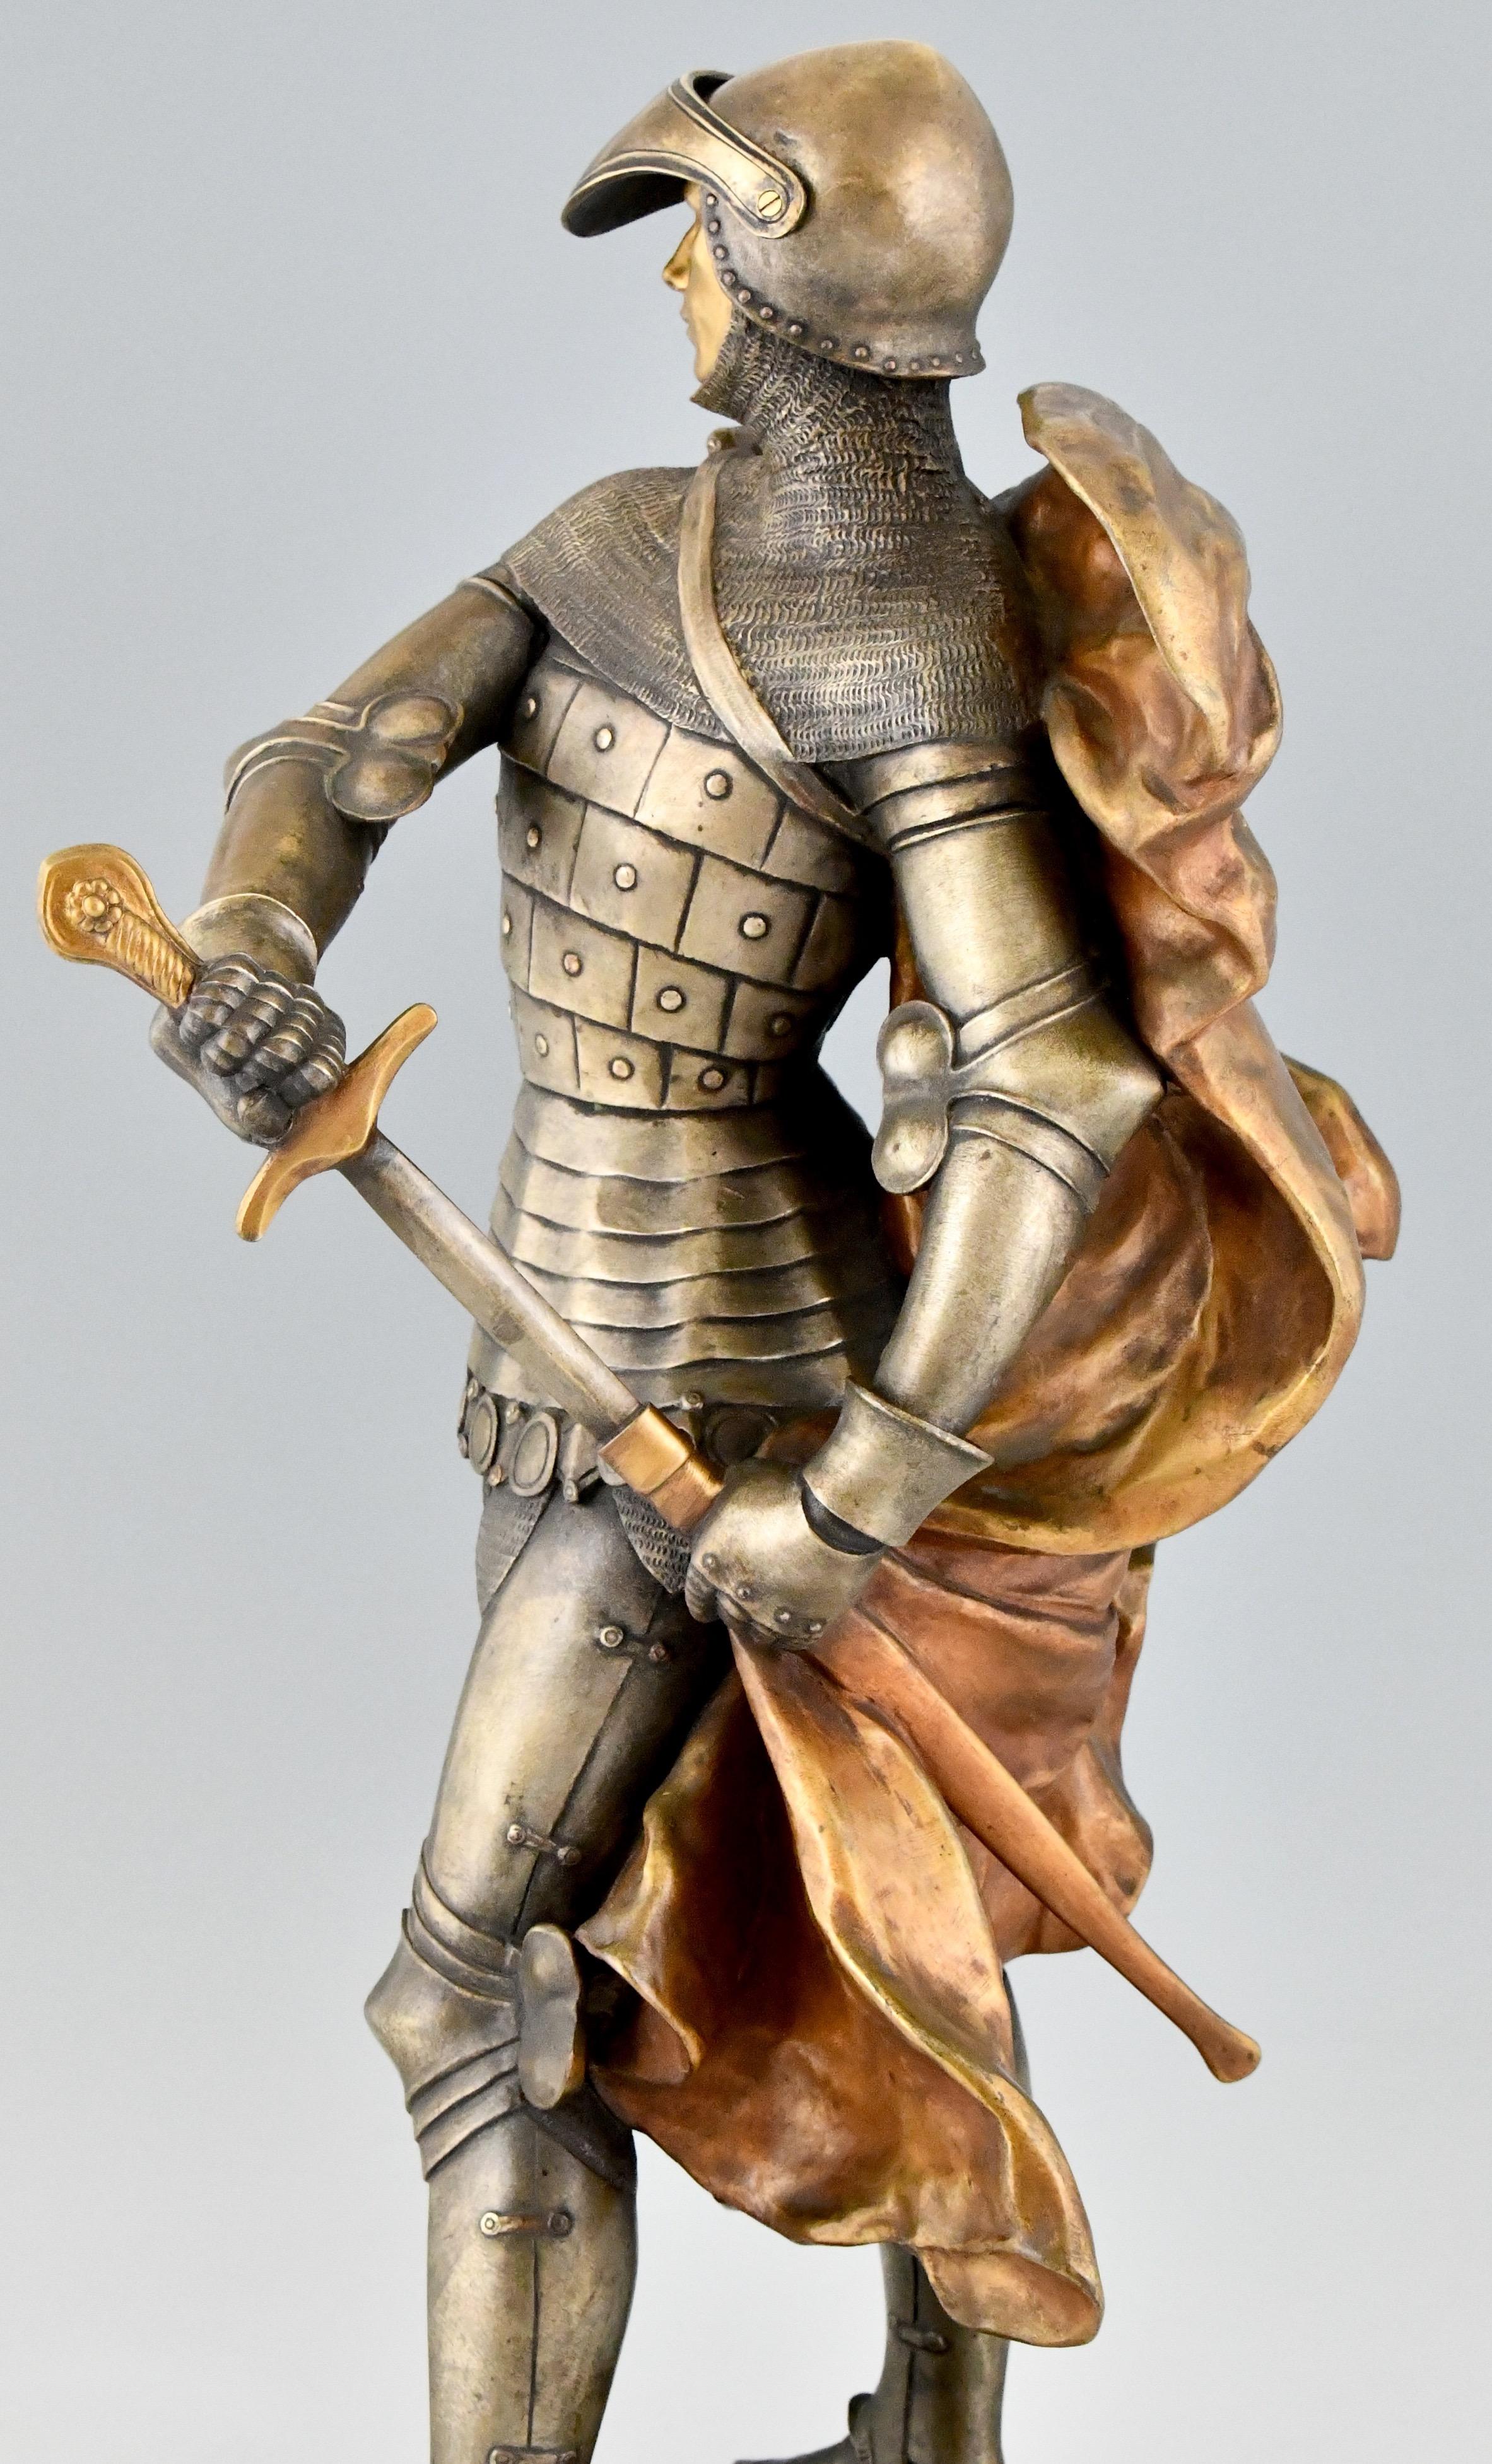 20th Century Art Nouveau Bronze Sculpture of a Knight in Armor, Lucas Madrassi